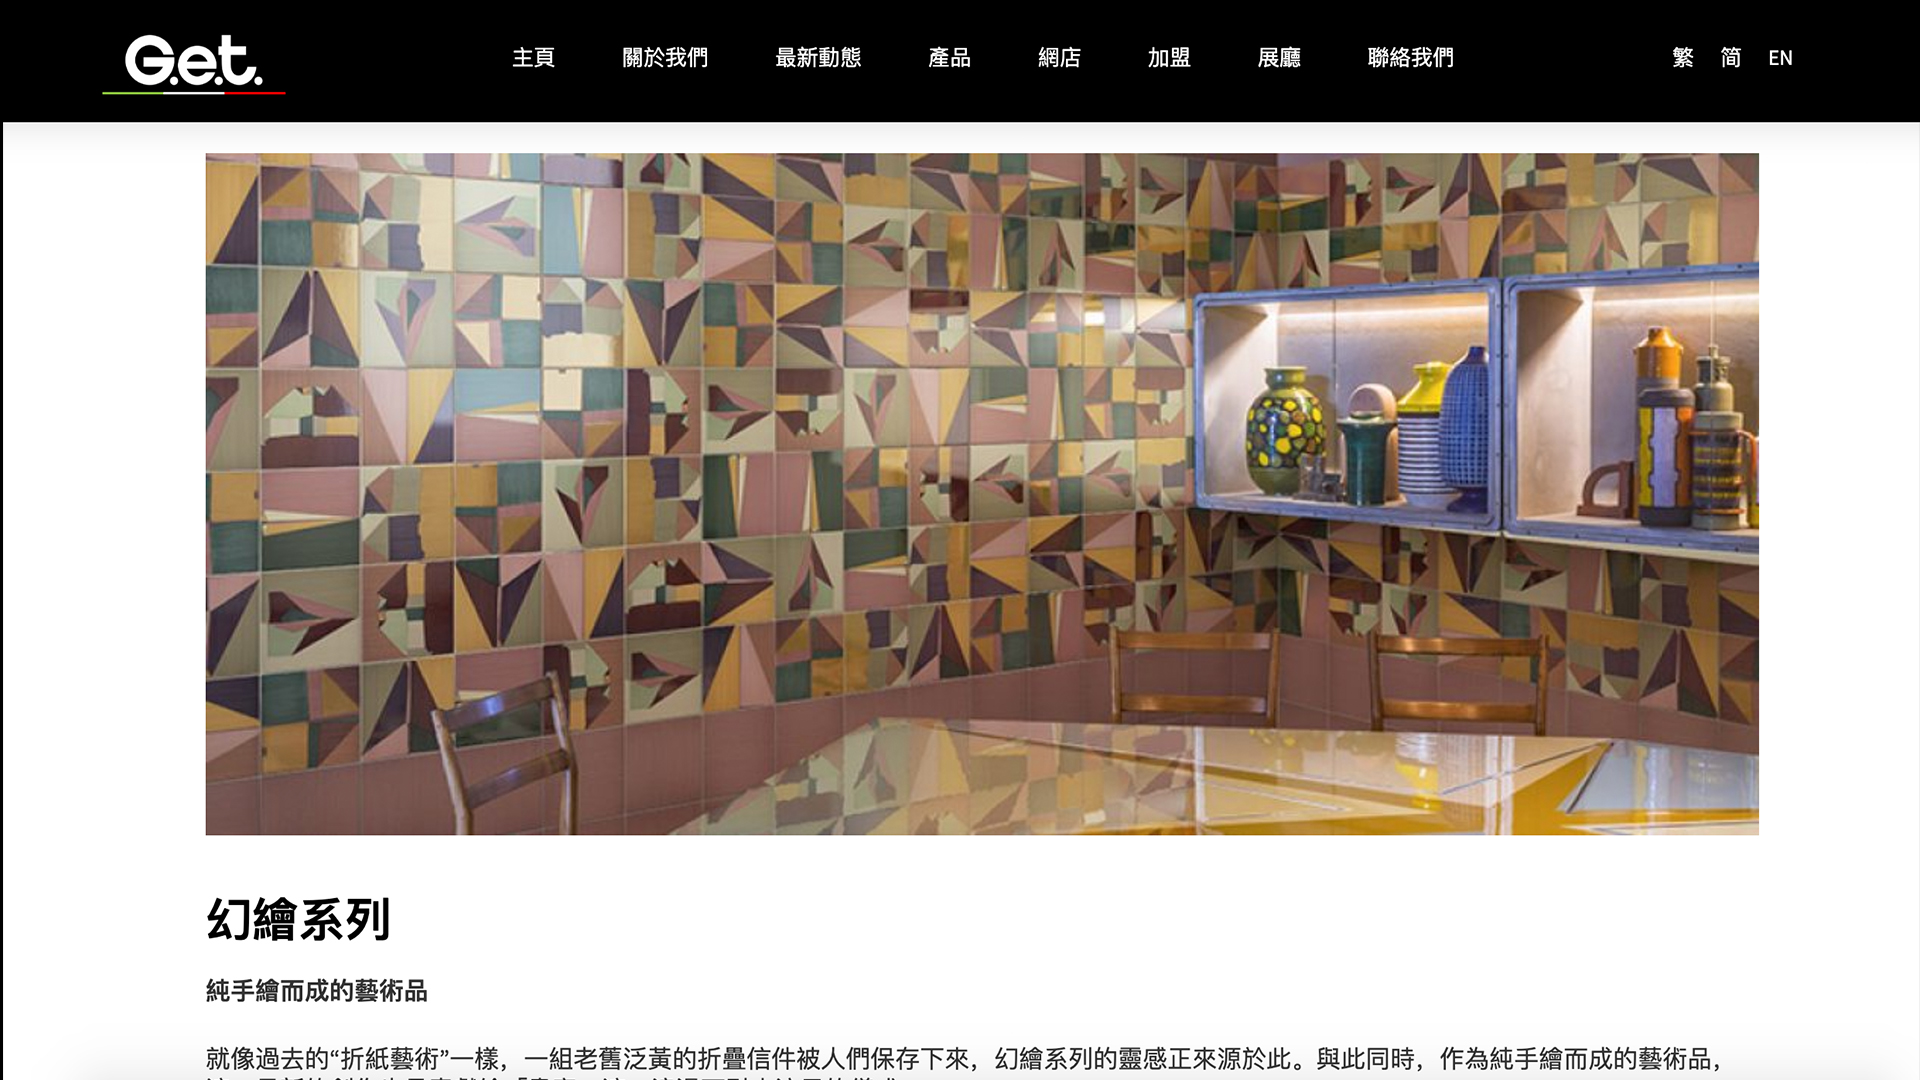 D2 Studio 品牌设计, 品牌策划与网页设计香港及广州中国公司为香港与中国建材公司安排的品牌策划与网页设计服务3